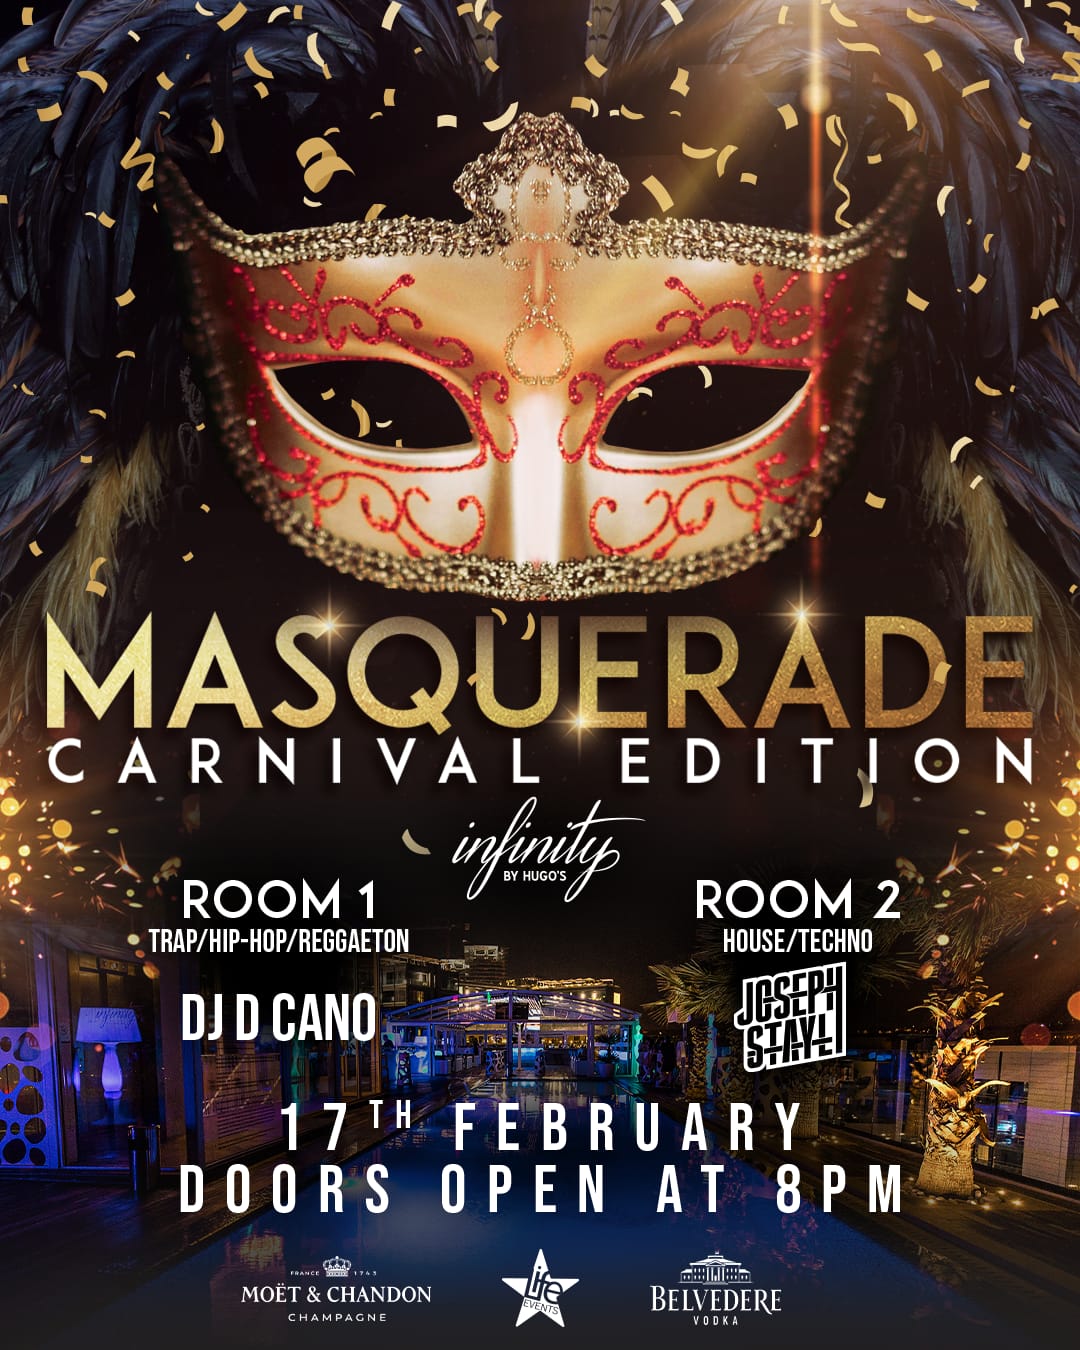 Masquerade Carnival Edition poster